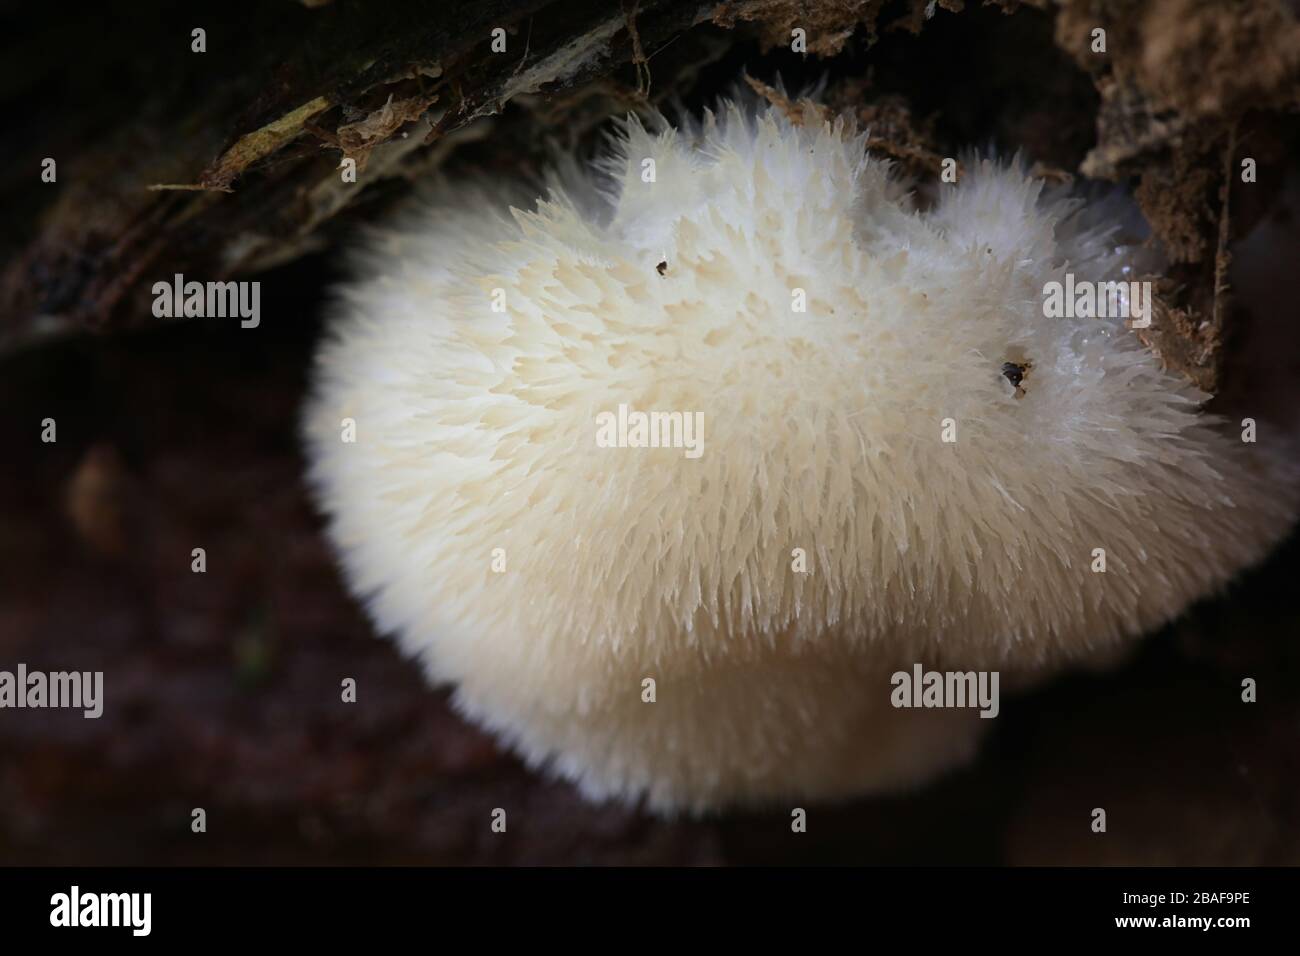 Postia ptychogaster, known as the powderpuff bracket, wild fungi from Finland Stock Photo